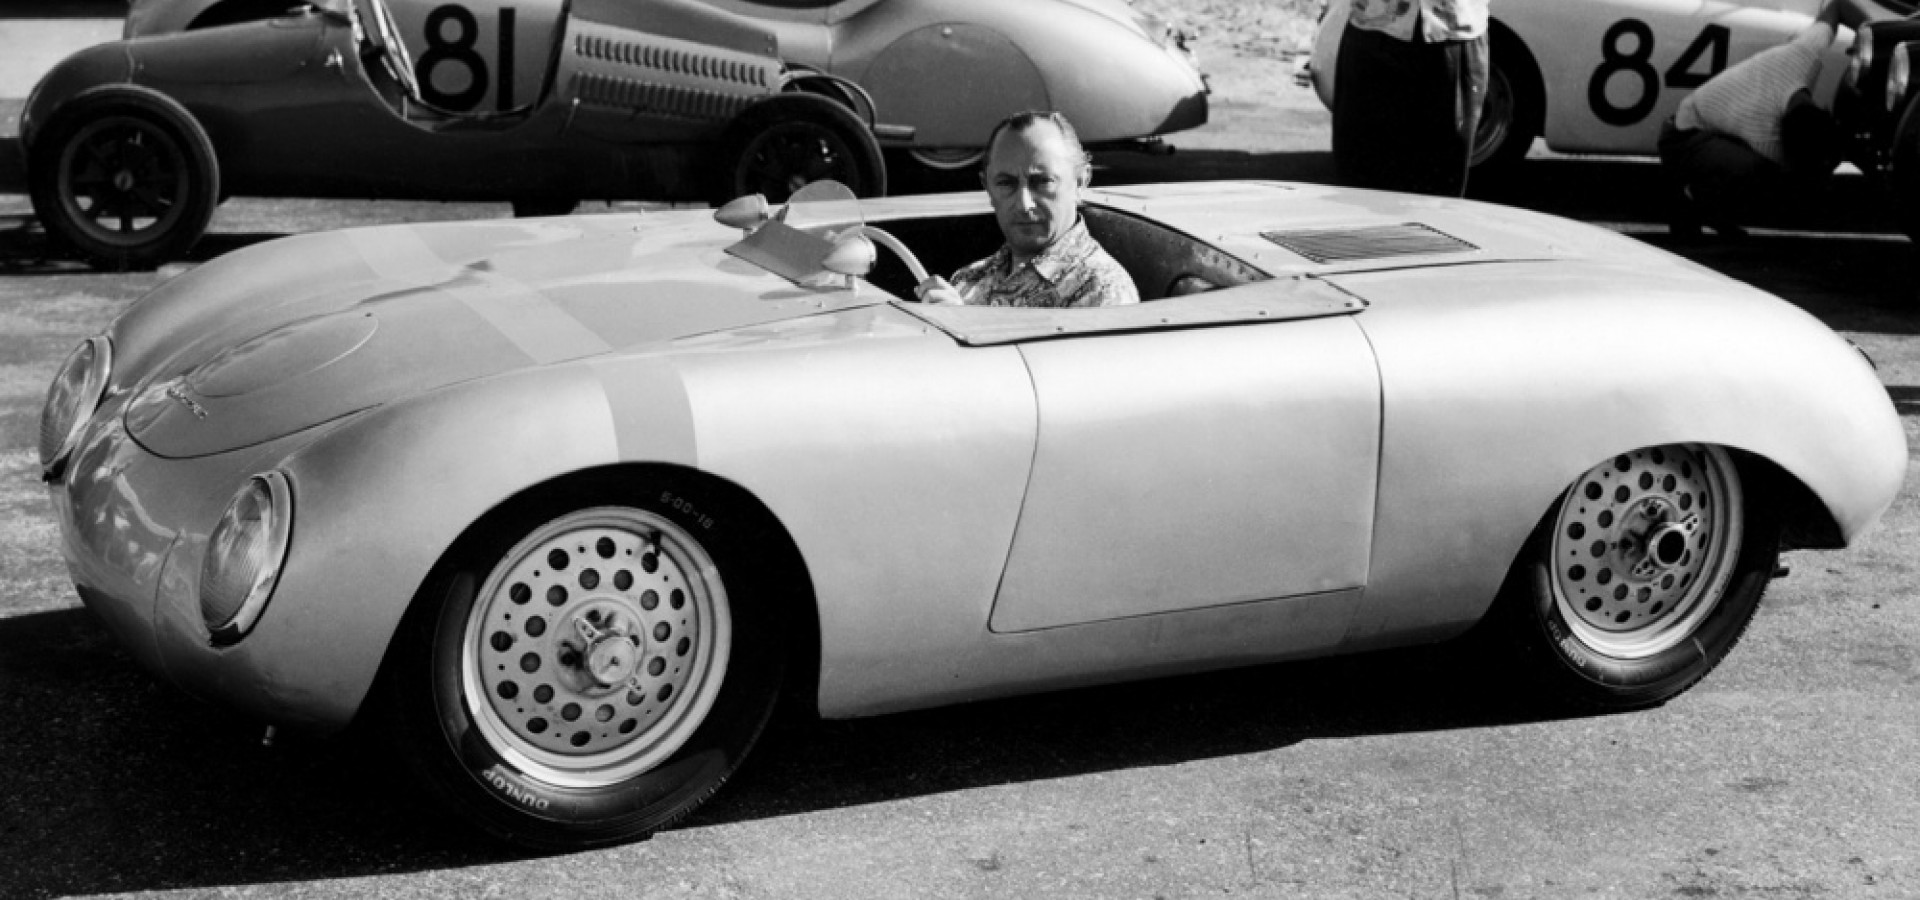 Hoffman Imports the Porsche 356, 1950-1953